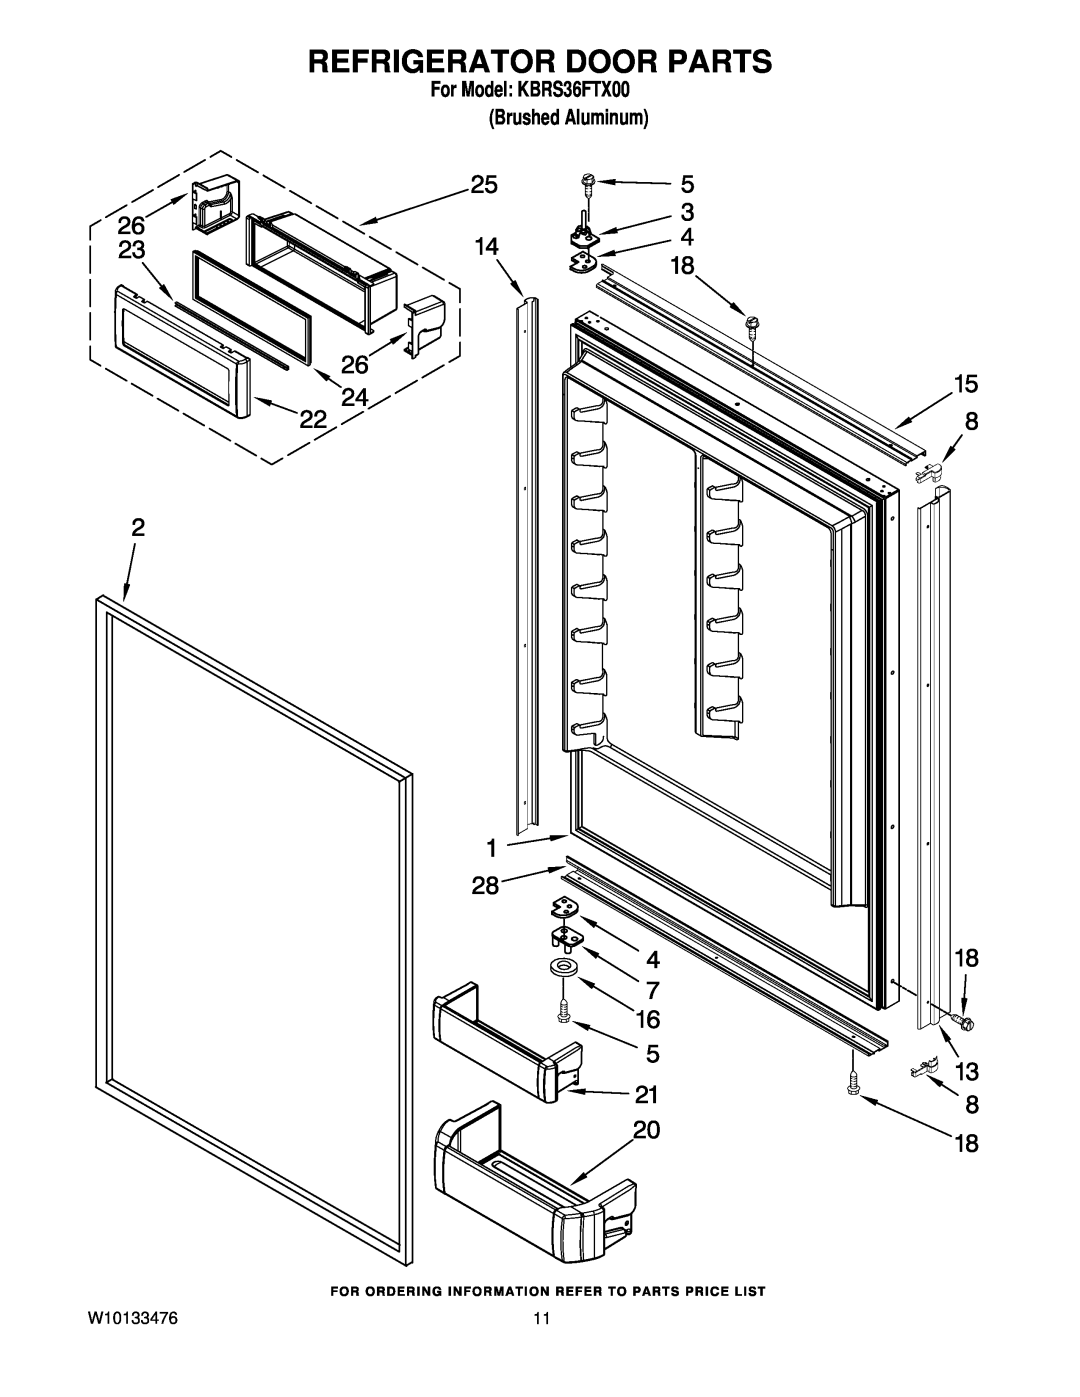 KitchenAid manual Refrigerator Door Parts, W10133476, For Model KBRS36FTX00 Brushed Aluminum 